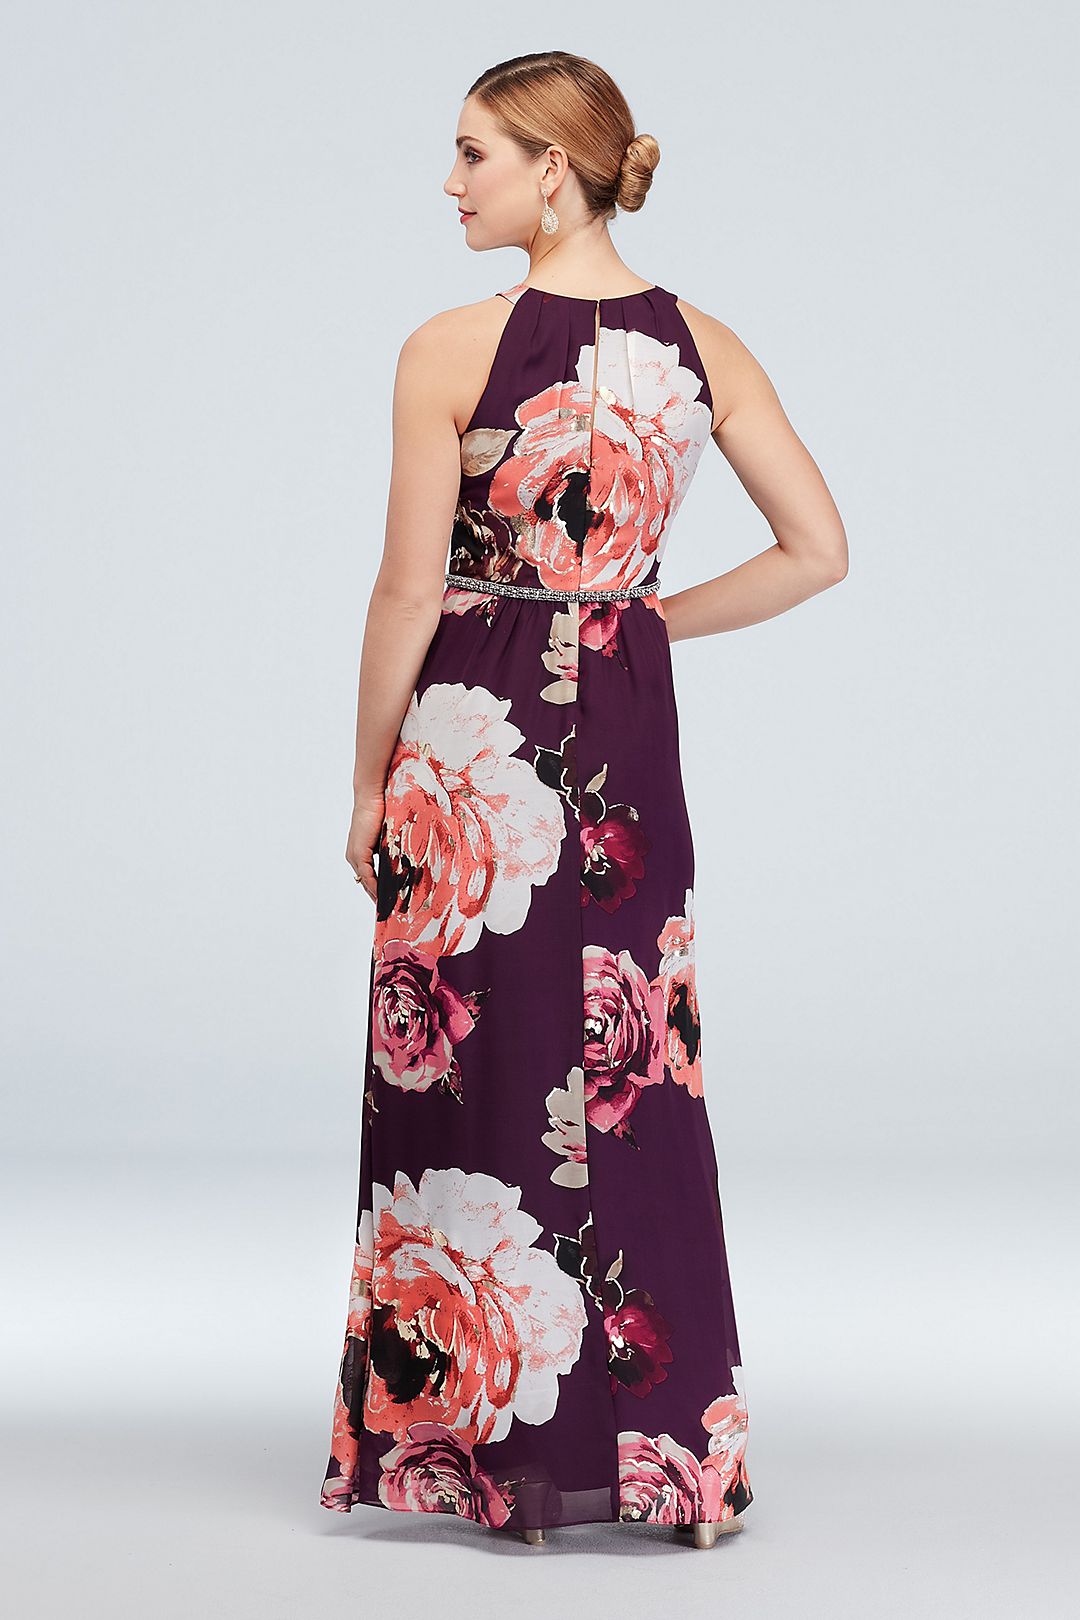 Floral Print Chiffon Halter Dress with Beaded Belt Image 4